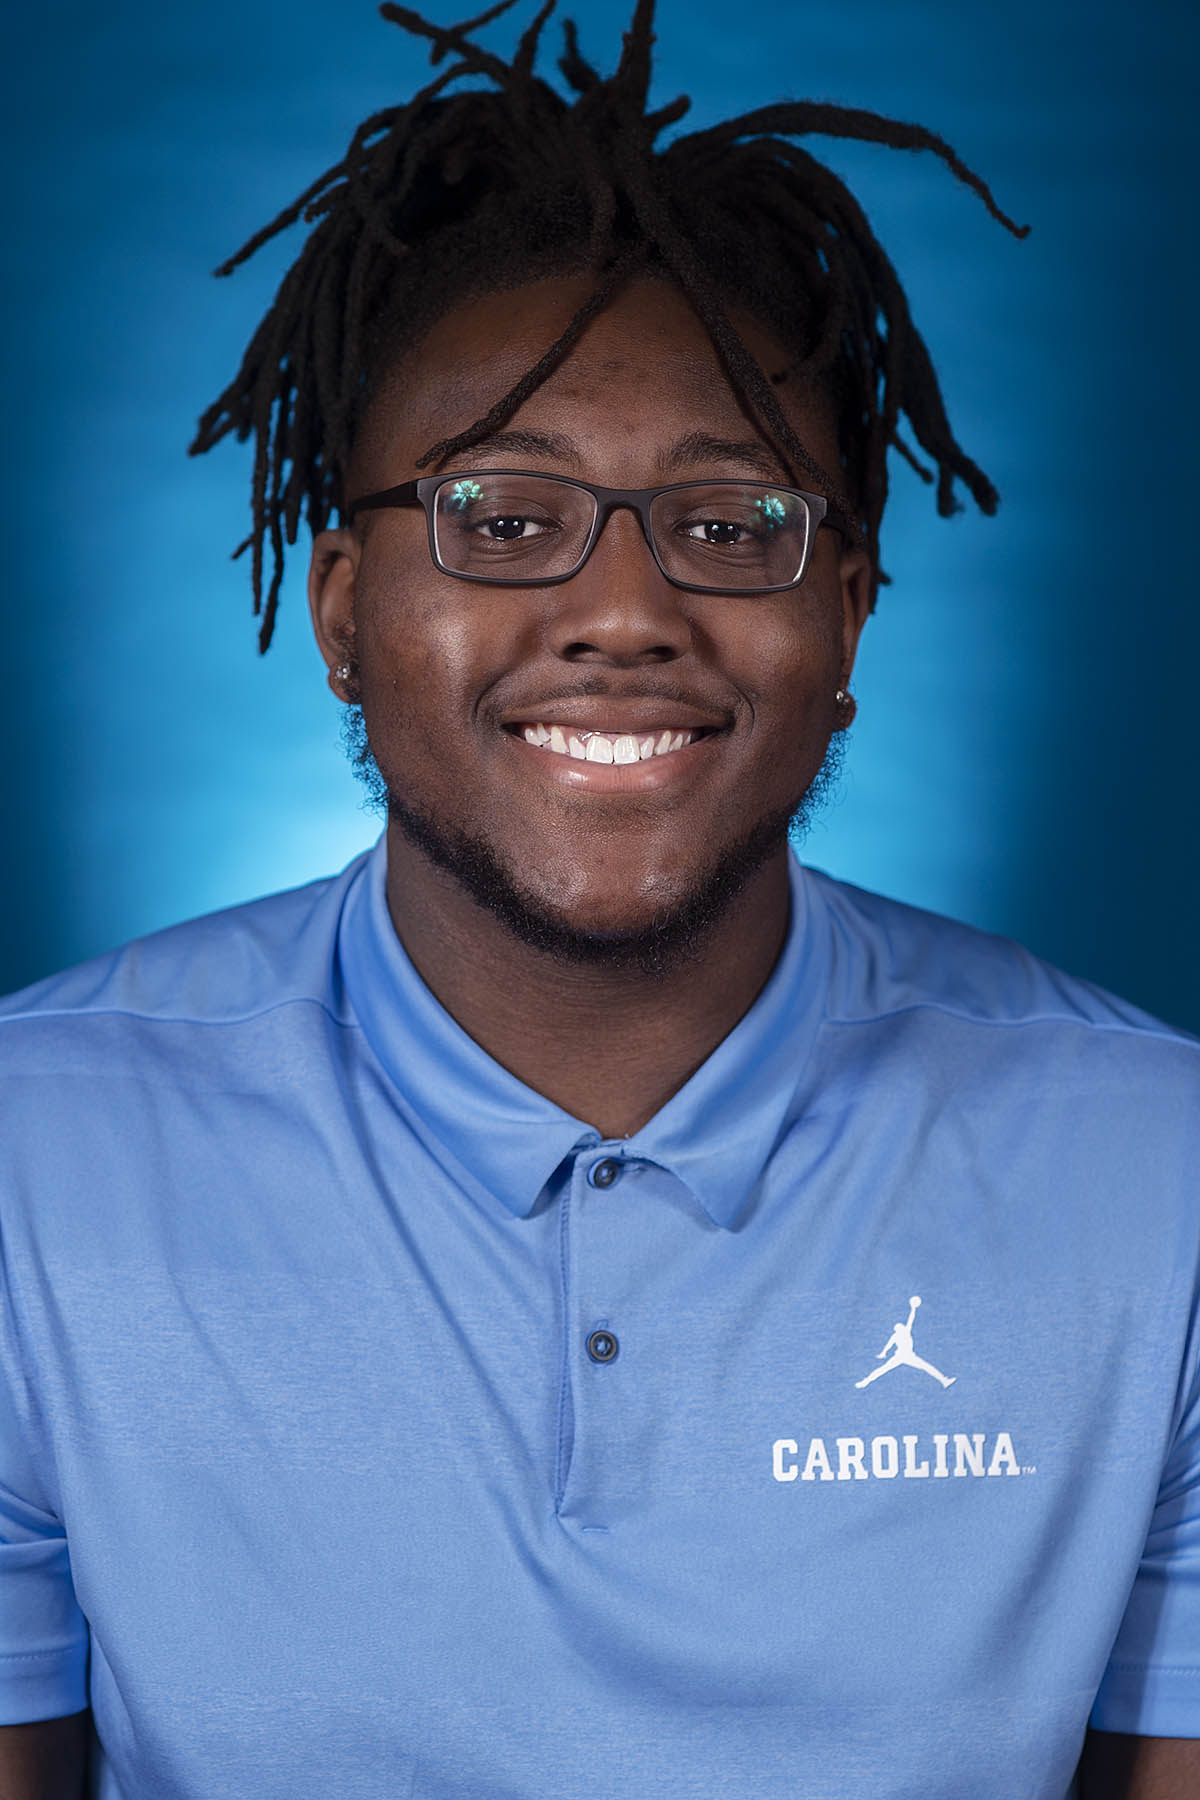 Joshua Ezeudu
2019 headshot
University of North Carolina Football 
Kenan Football Center
Chapel Hill, NC
Monday, April 15, 2019